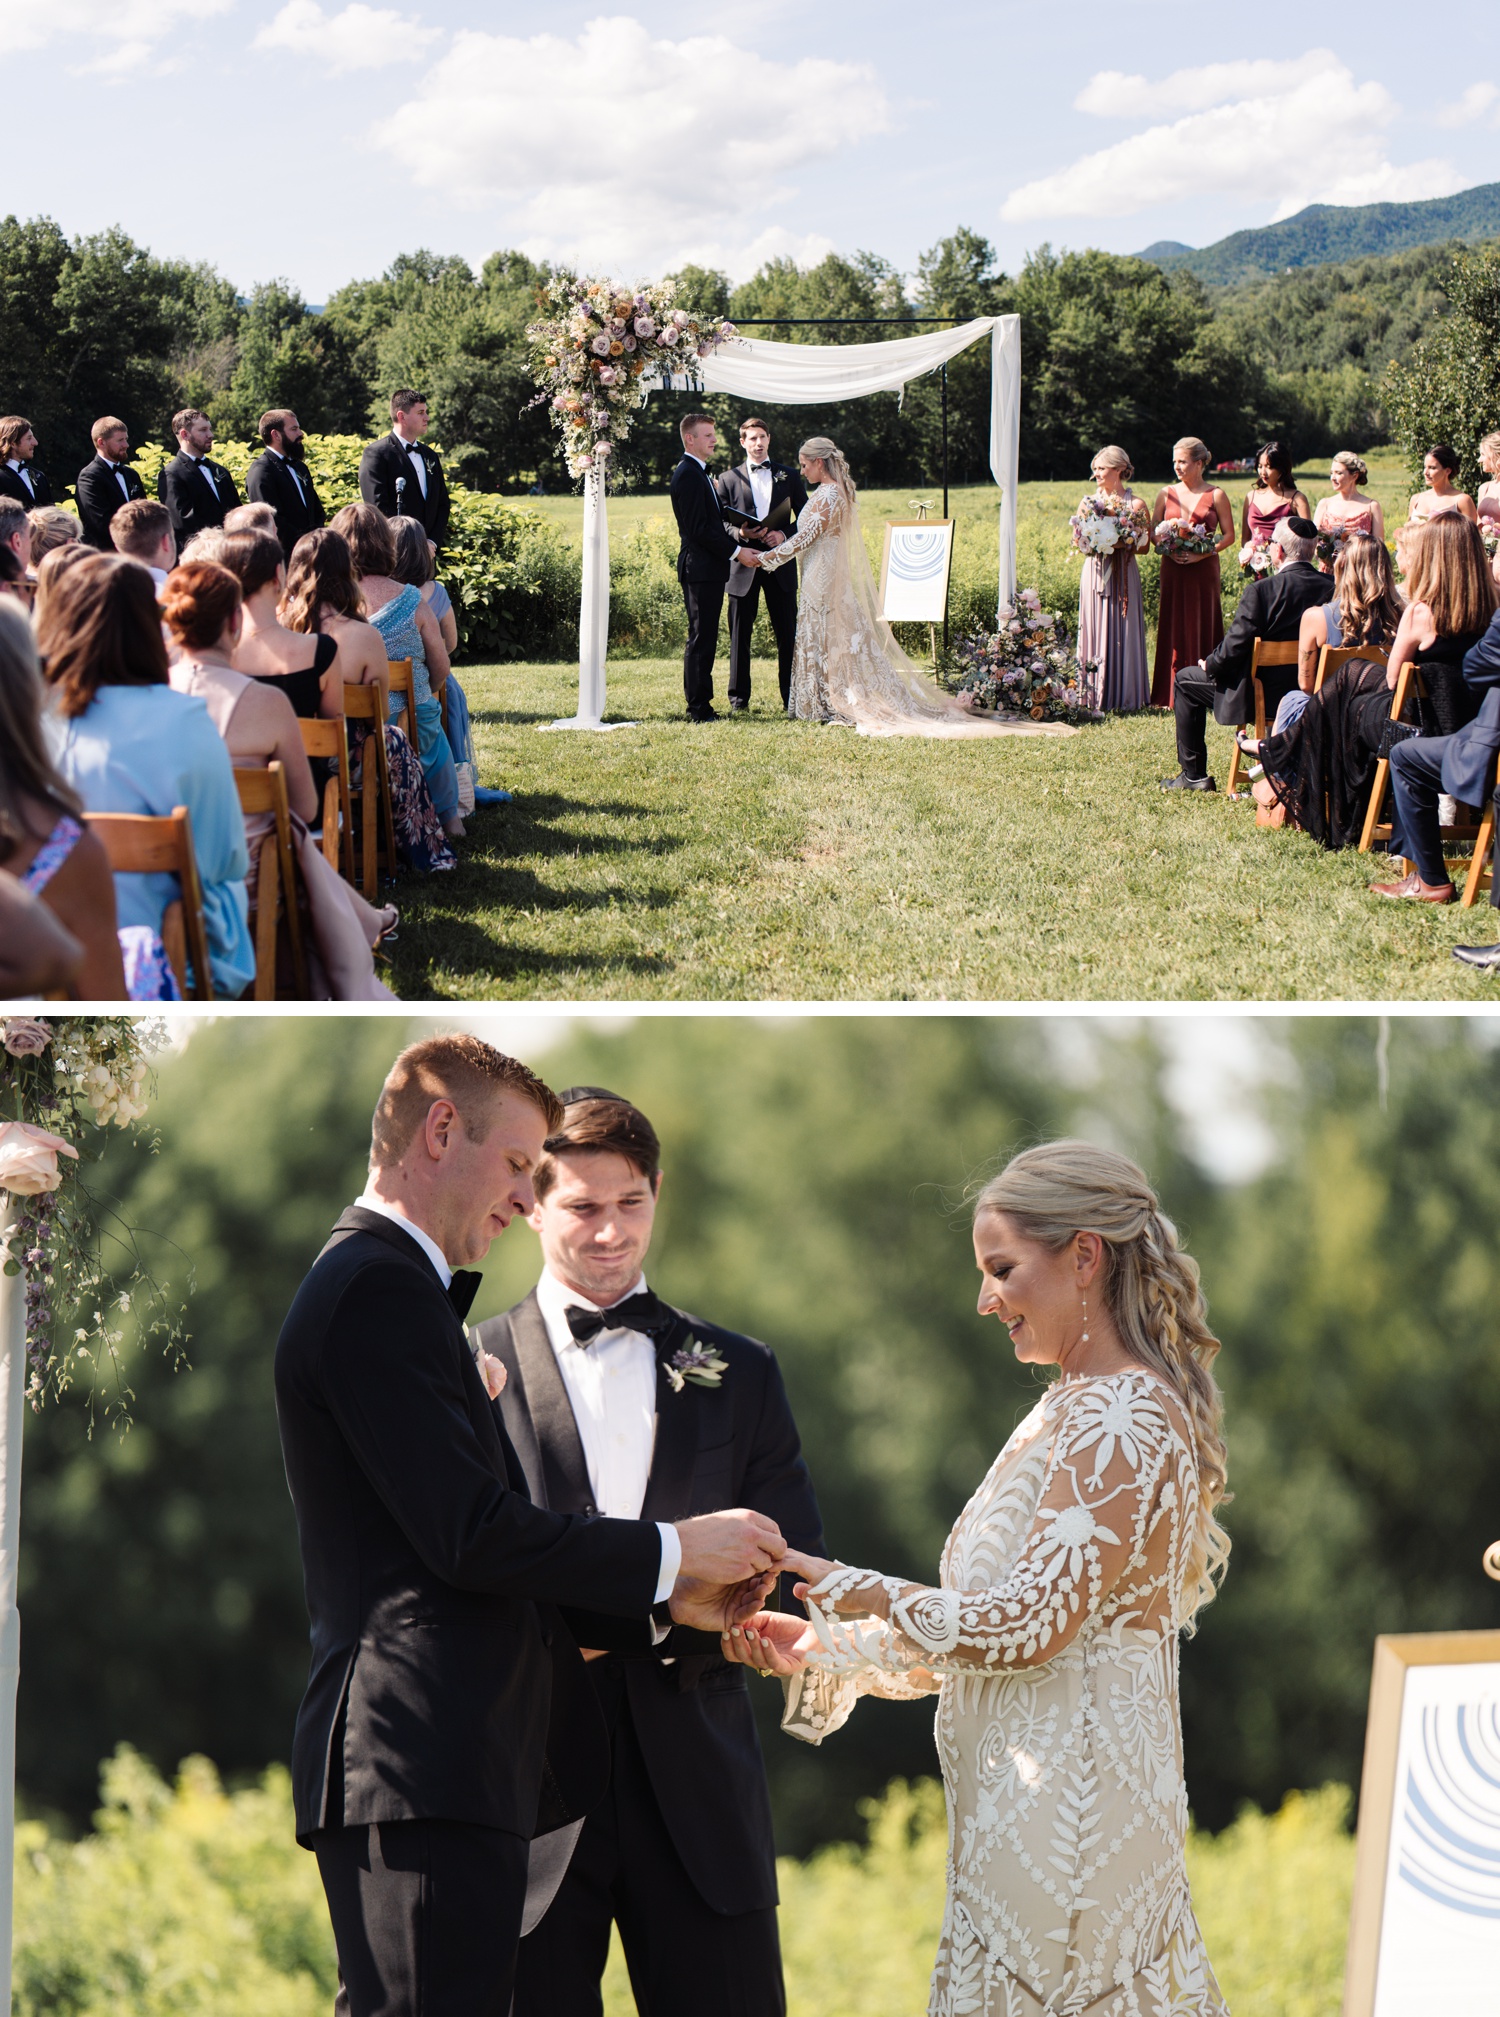 Summer outdoor wedding ceremony at Topnotch Resort